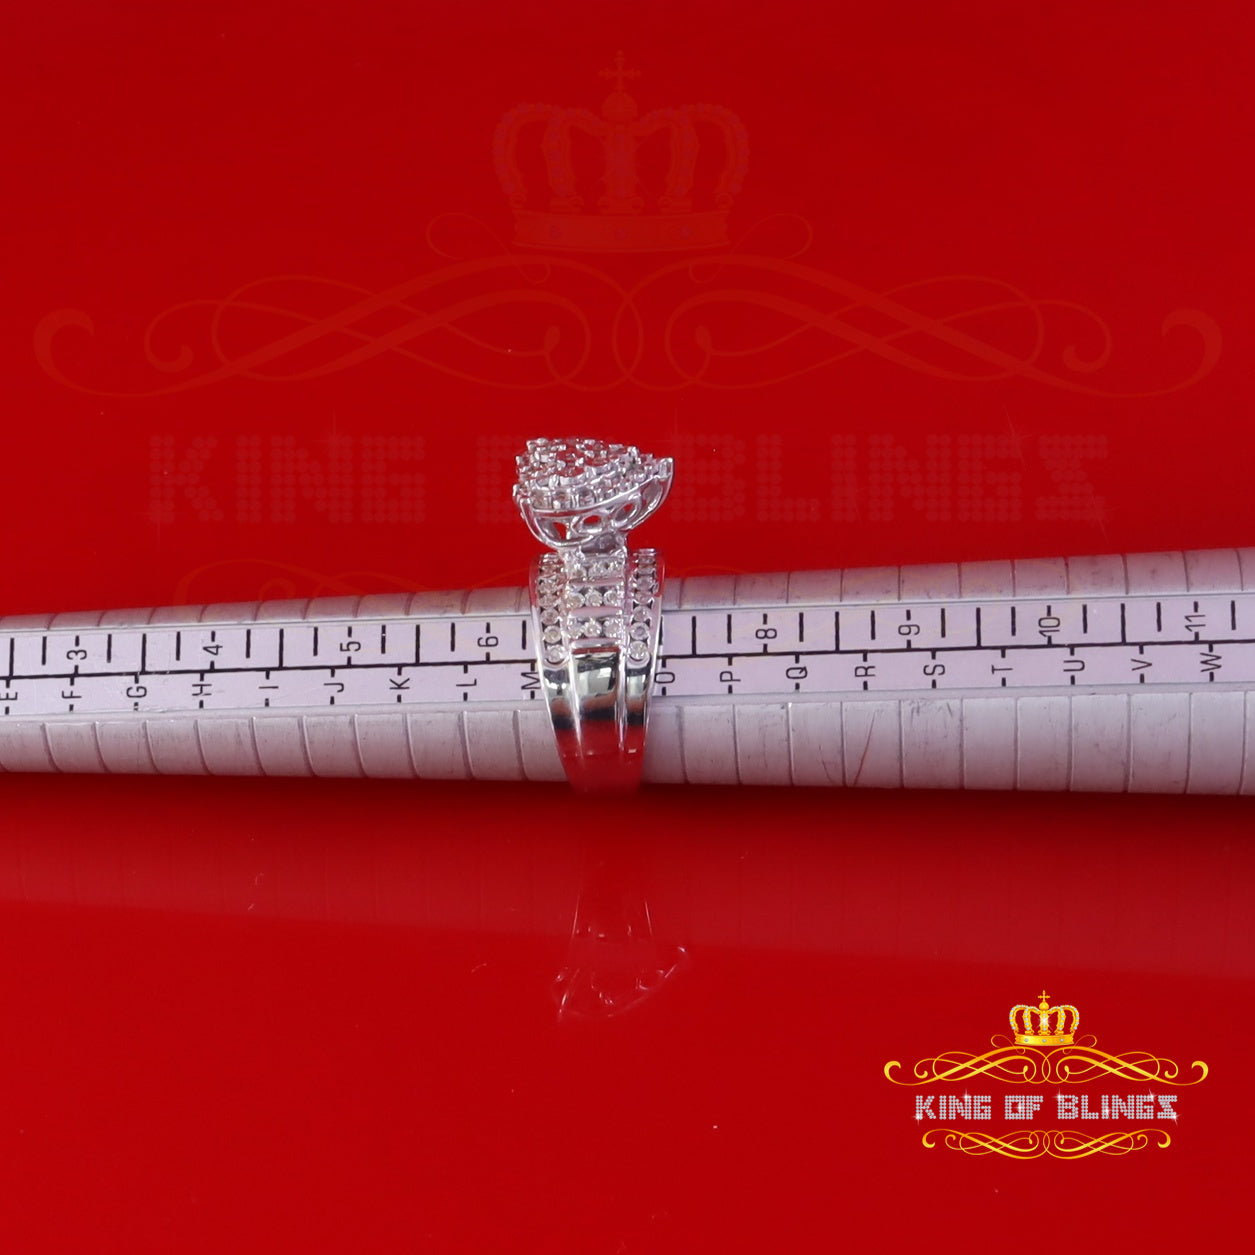 King Of Bling's White Real Diamond 0.33ct 925 Silver Cindarella Women Engagement Heart Ring SZ 7 King of Blings